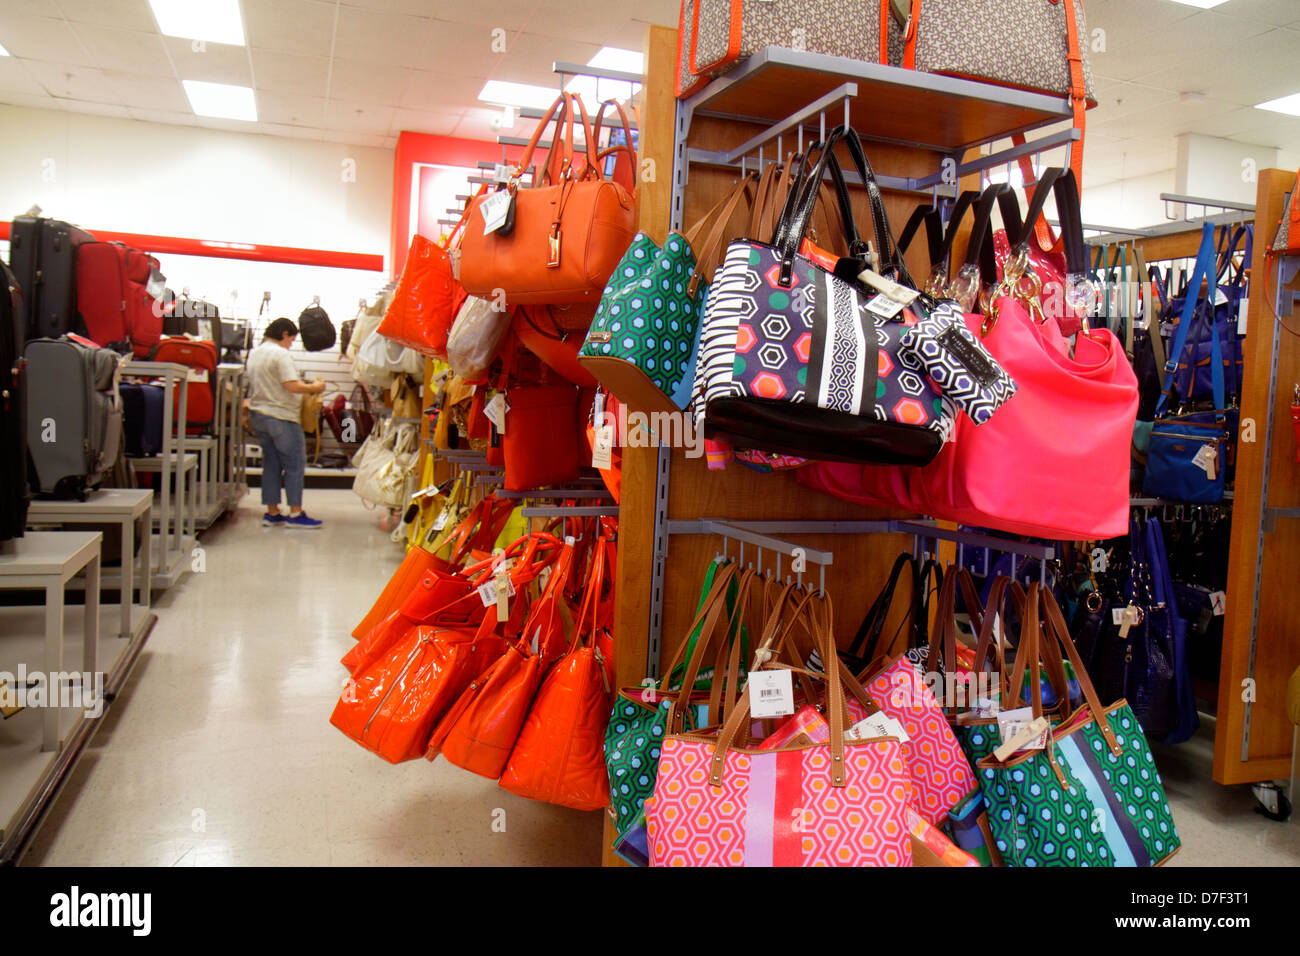 Miami Florida TJ Maxx discount department store woman&#39;s handbags Stock Photo: 56266001 - Alamy